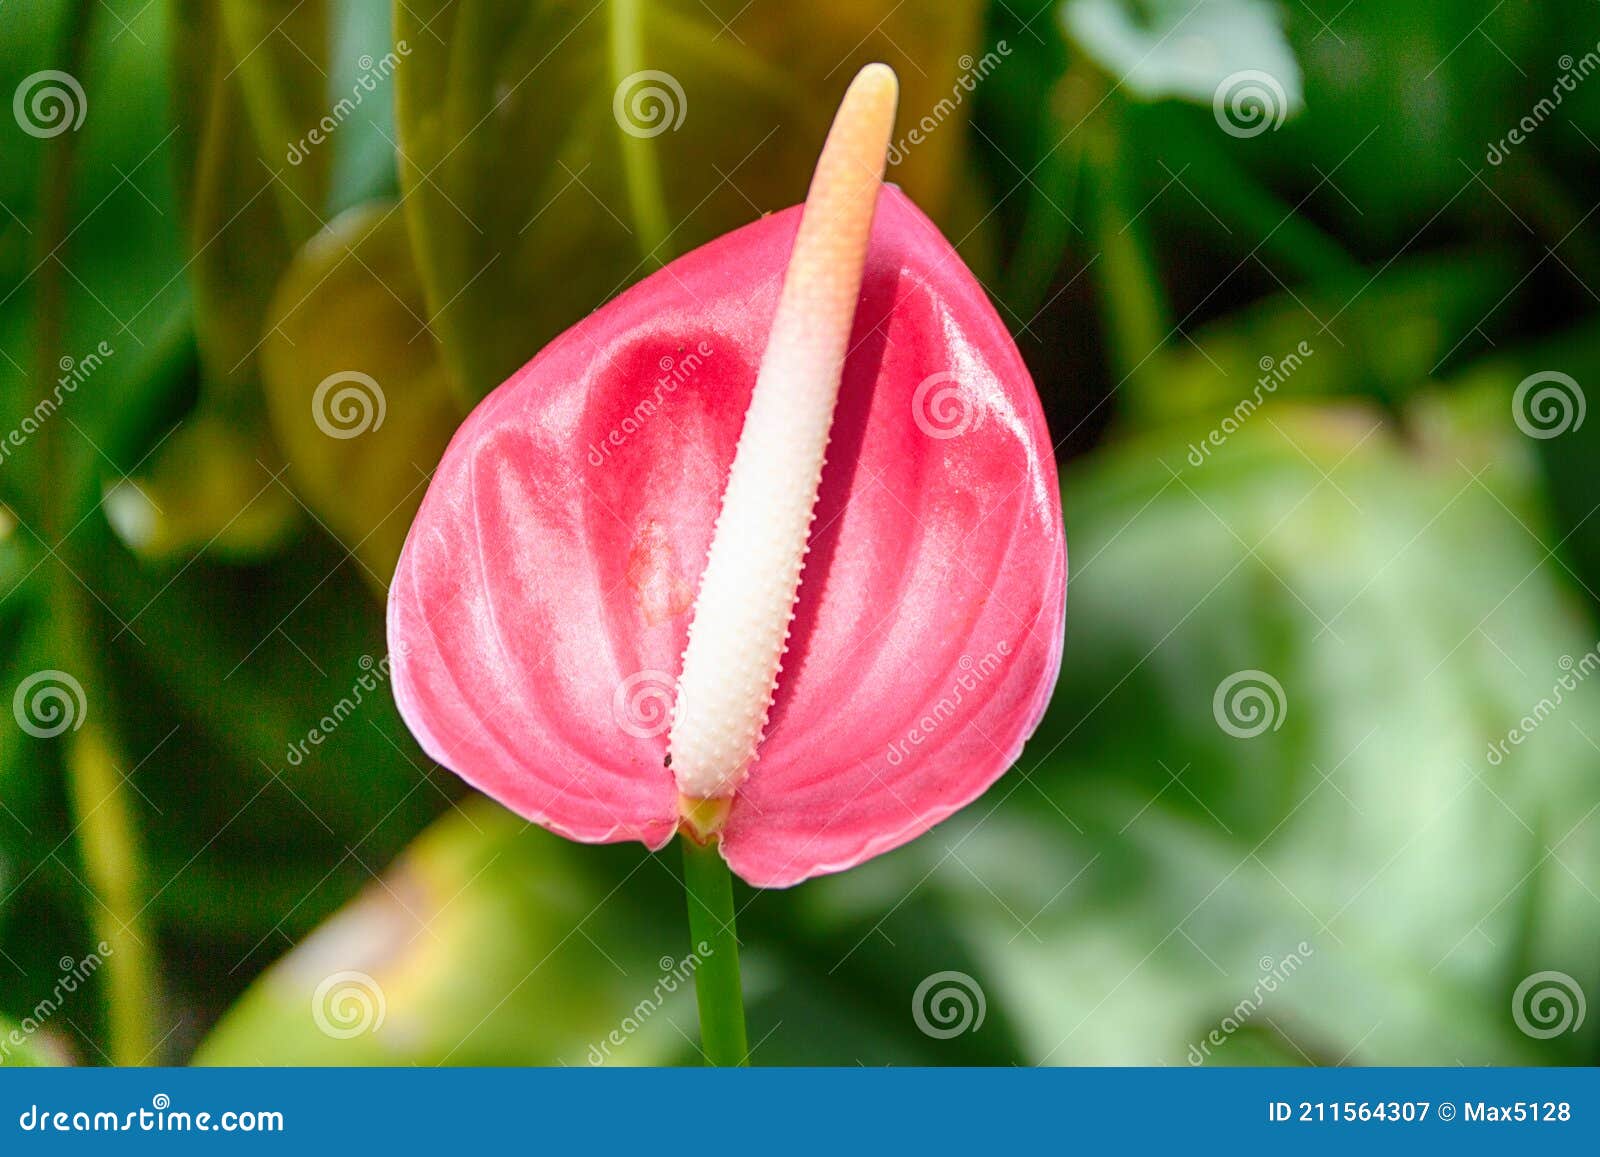 Flor carmesí de la cala imagen de archivo. Imagen de floral - 211564307